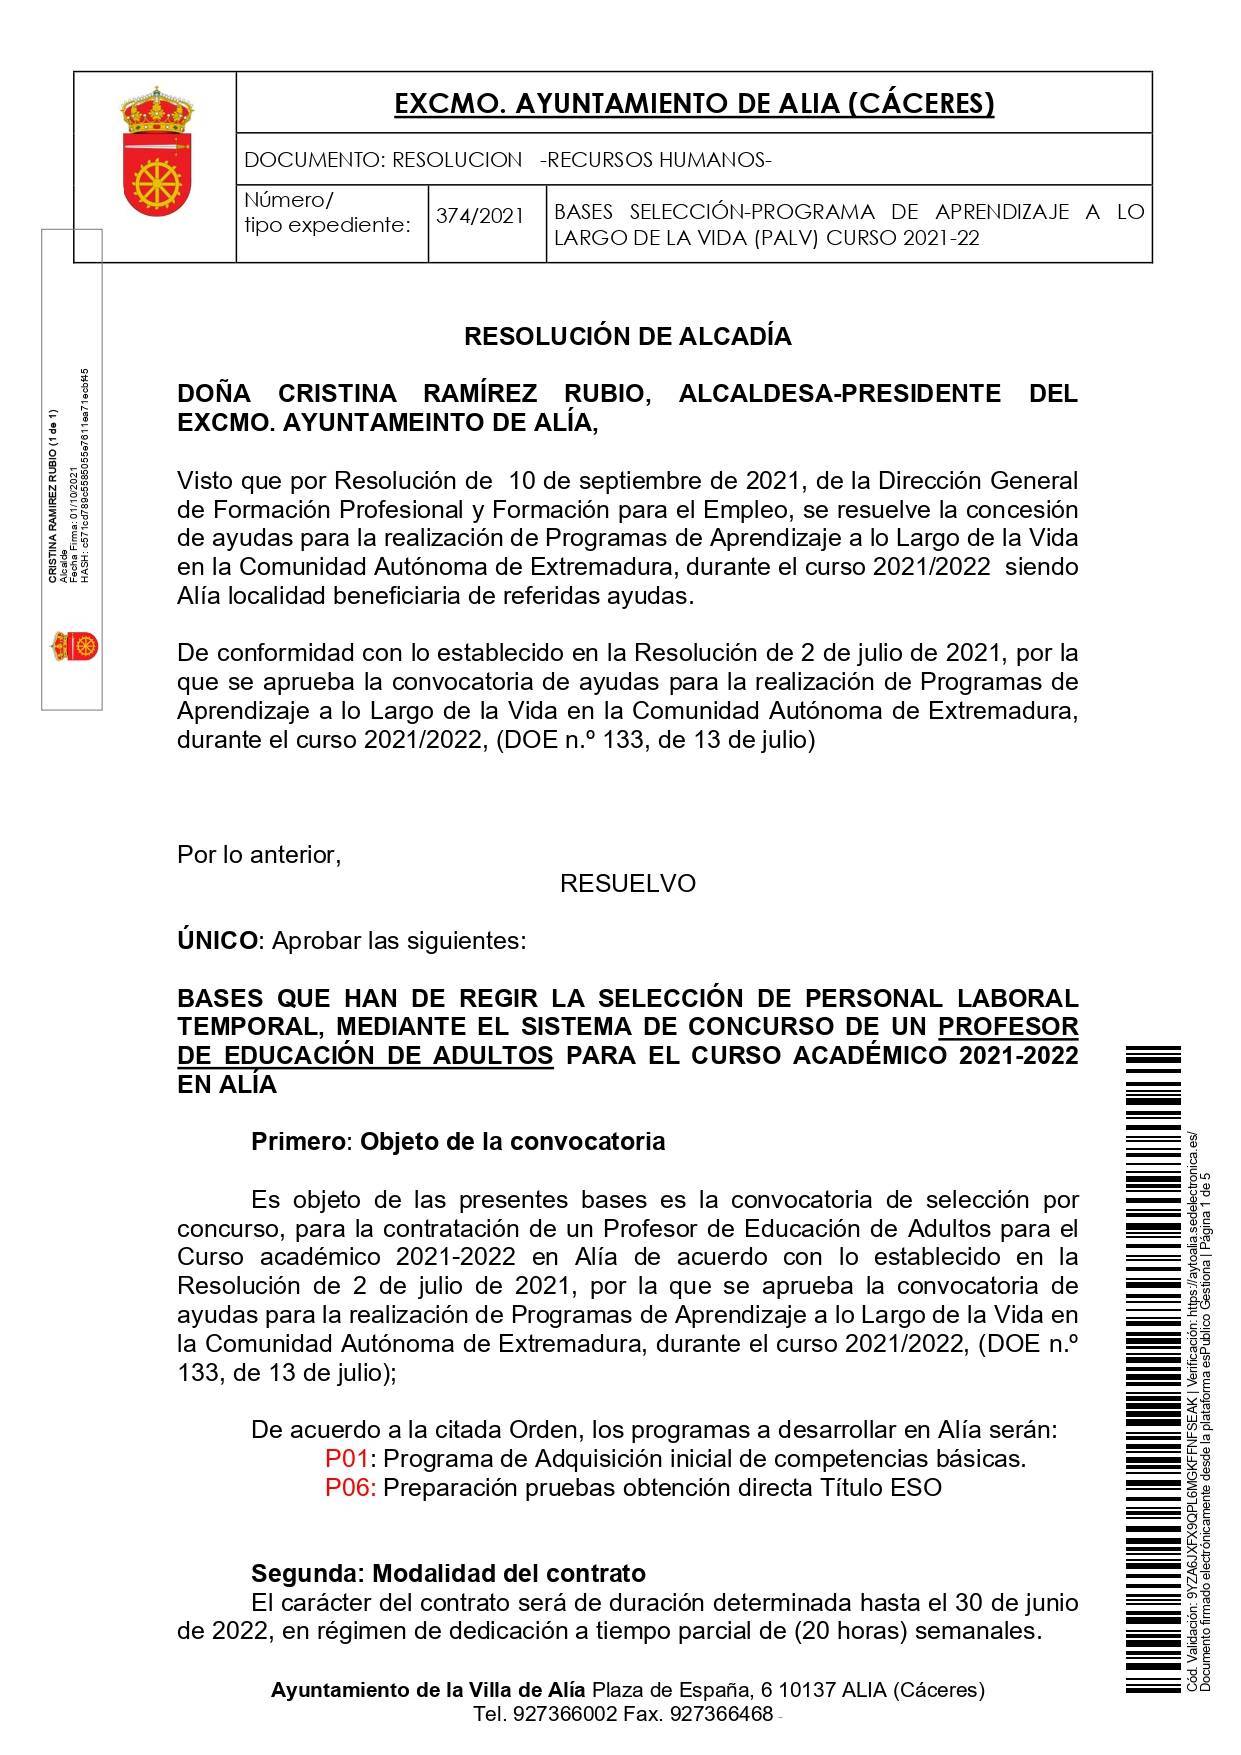 Profesor de educación de adultos (2021) - Alía (Cáceres) 1